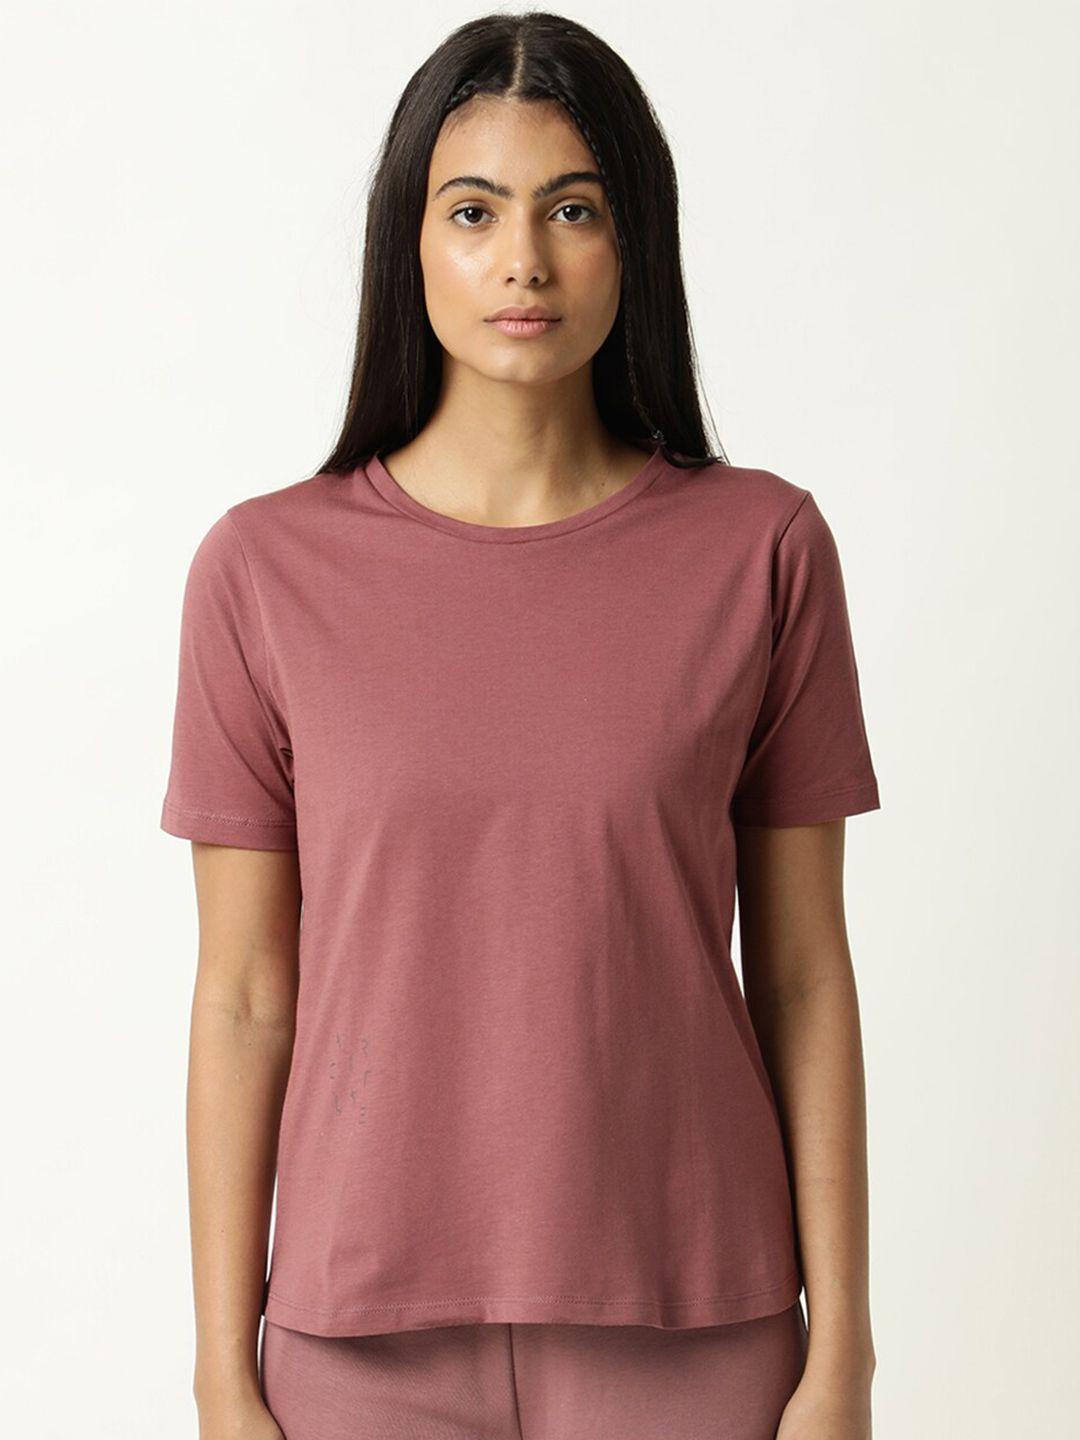 articale-women-pink-solid-slim-fit-cotton-t-shirt